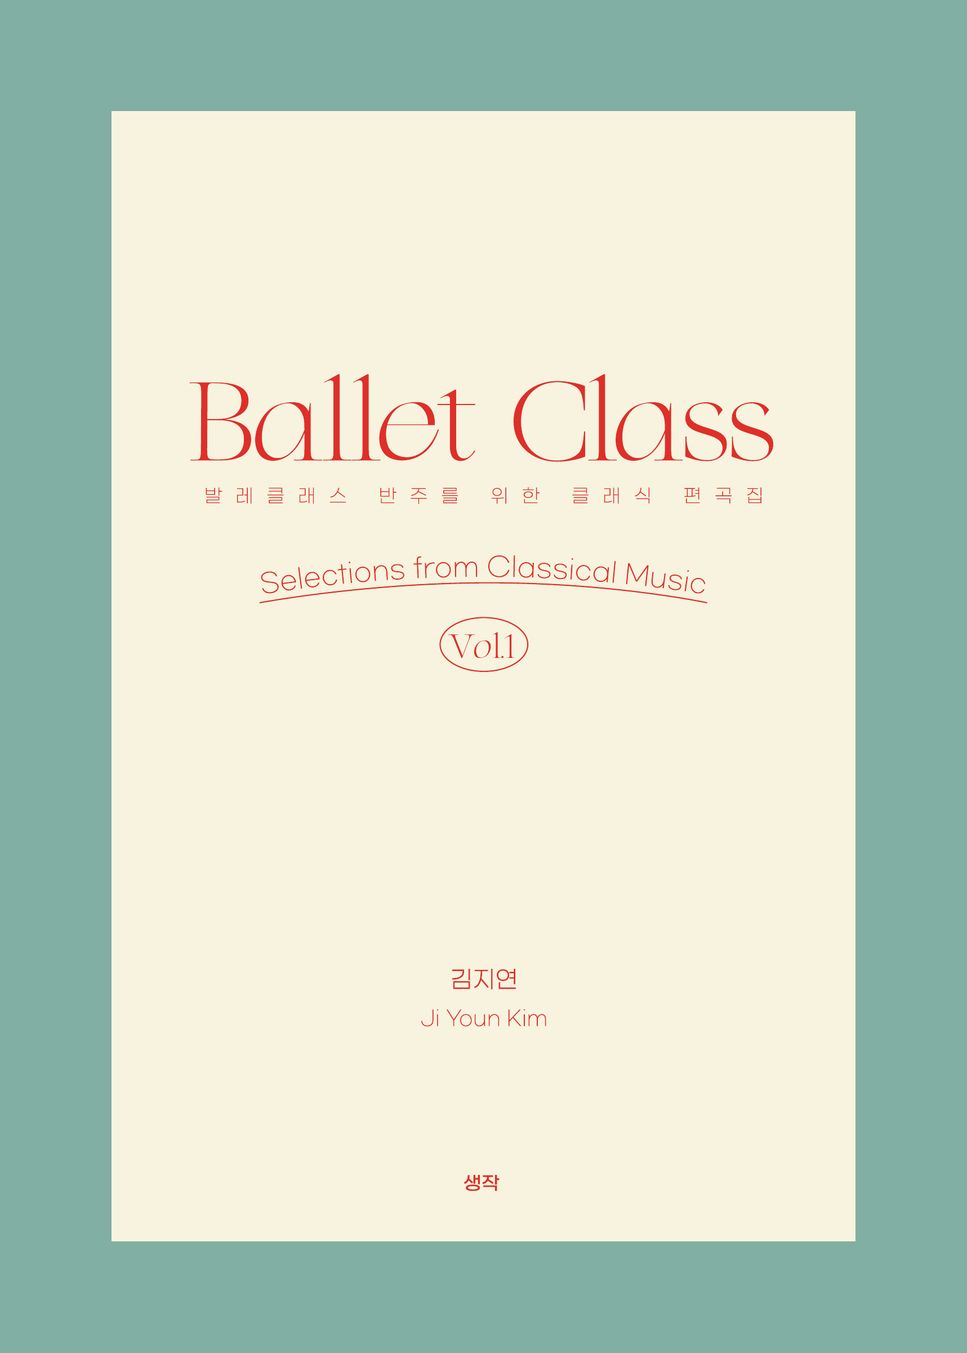 Ji Youn Kim - Ballet Class vol. 1 - 21. Waltz 2